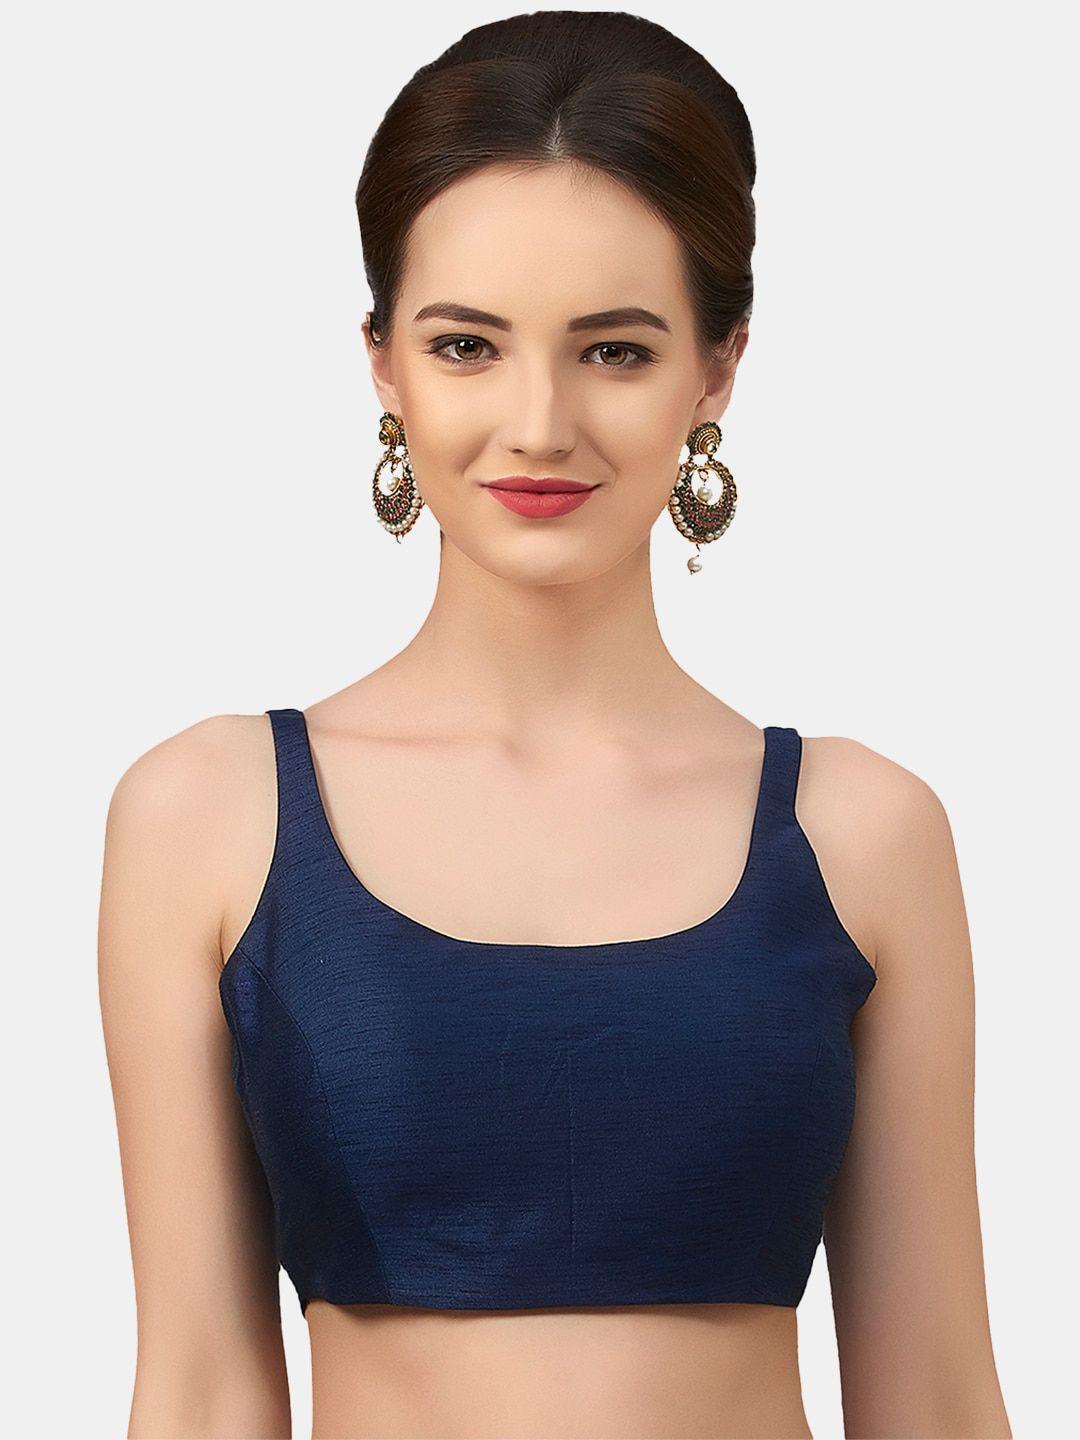 neckbook round-neck padded readymade saree blouse